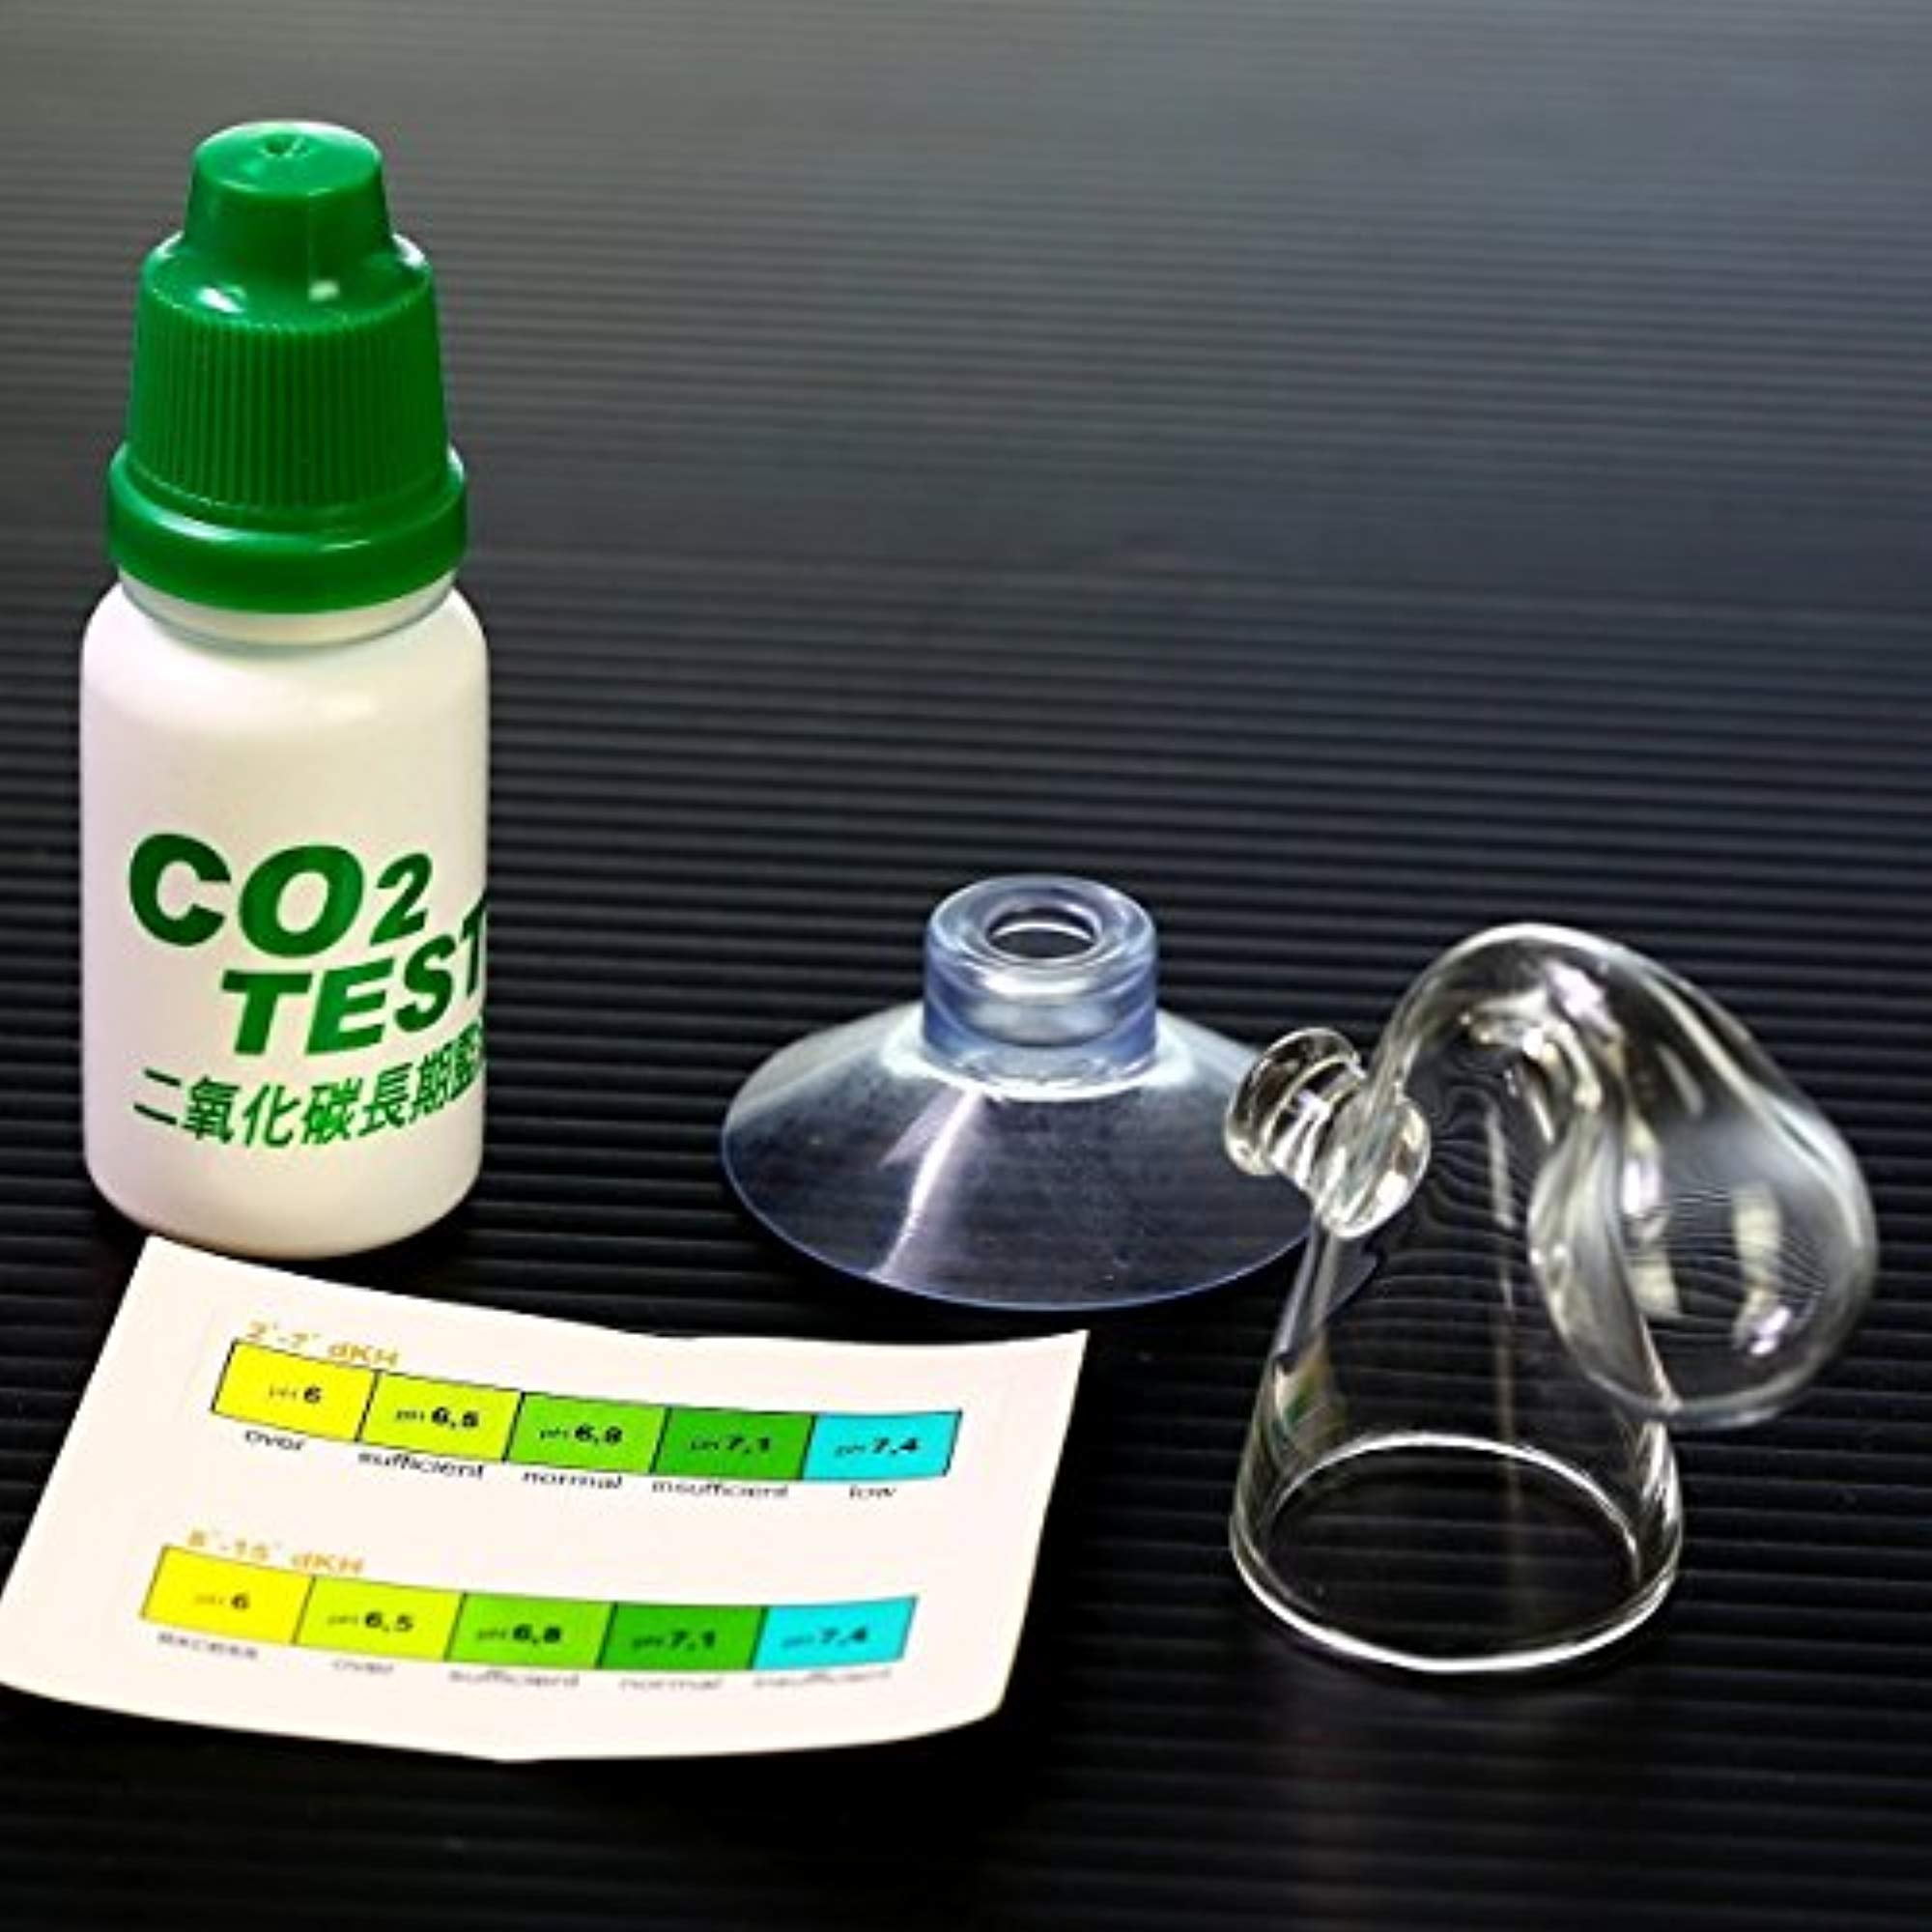 DR. moss CO2 Glass Drop Checker Test , Solution 10cc AQUARIUM for Indicator Drop Checker LONG TERM MONITOR test - Walmart.com